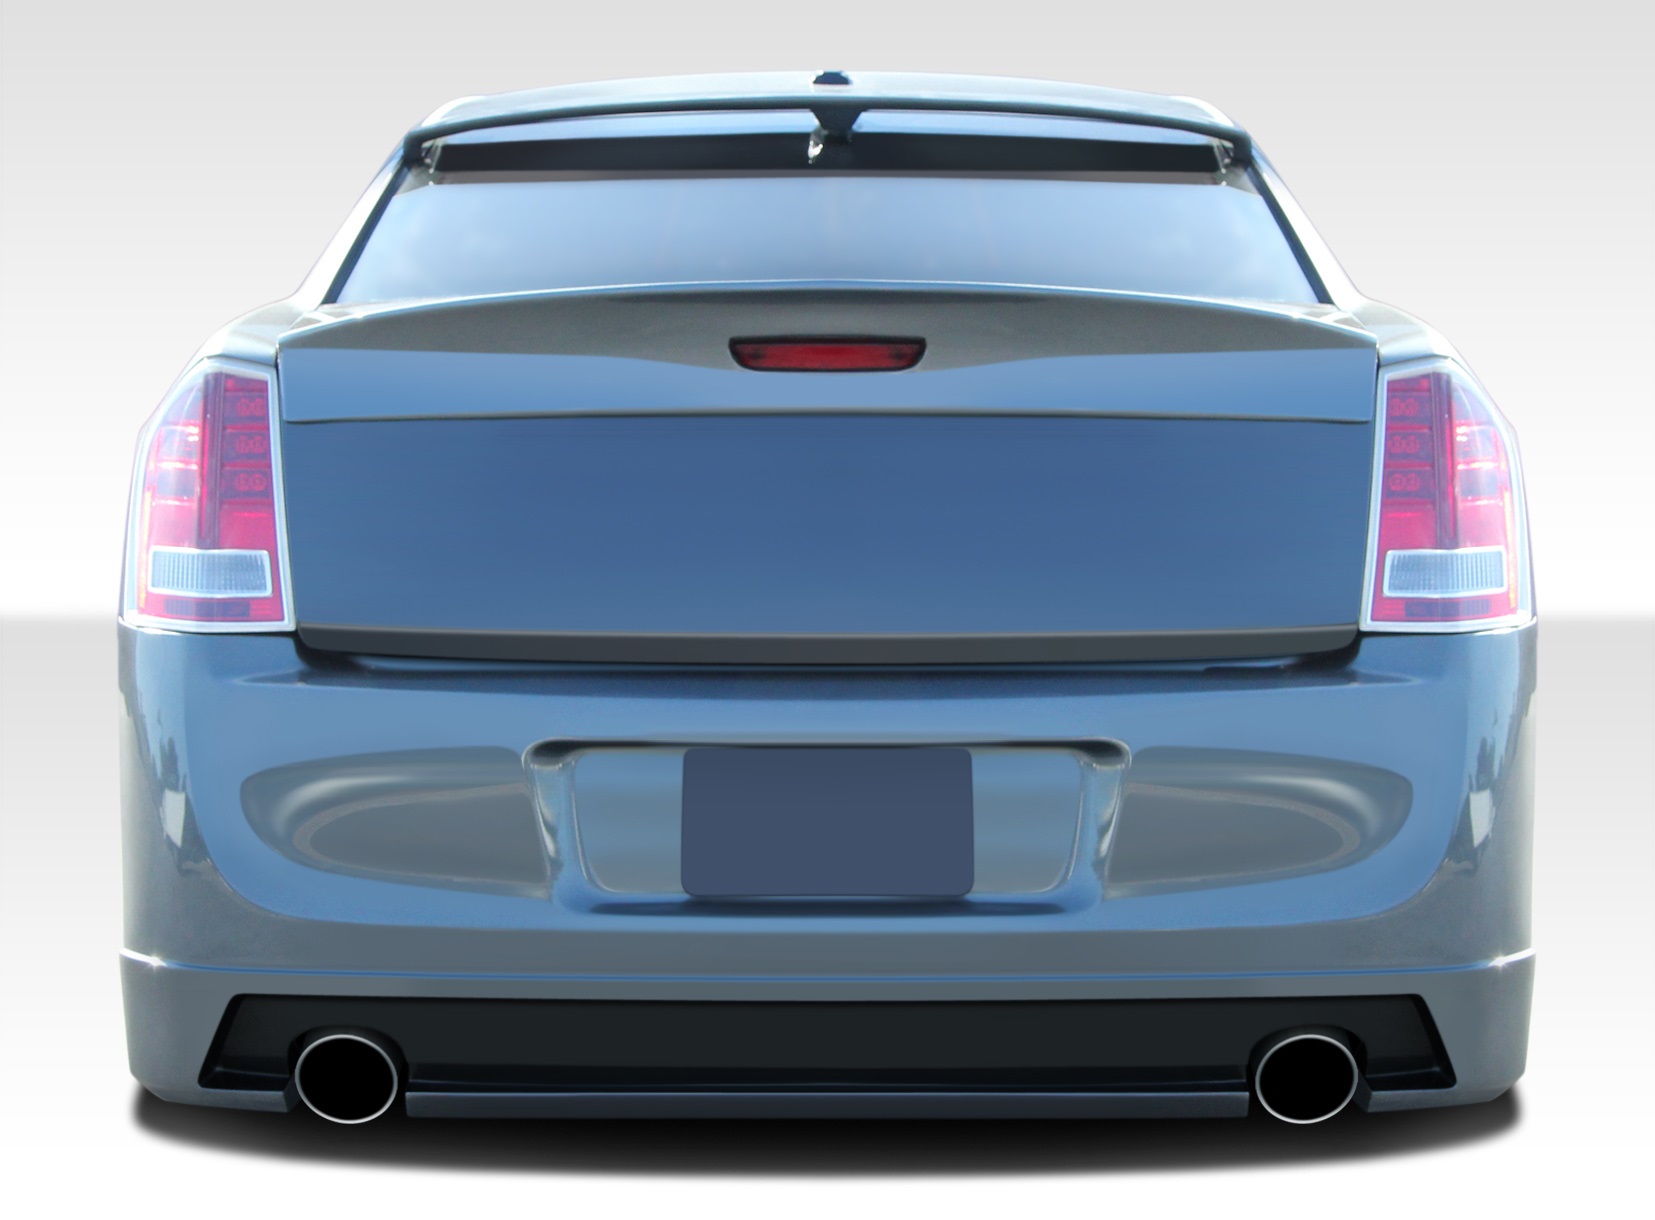 2011-2014 Chrysler 300 Duraflex Brizio Rear Bumper Cover - 1 Piece